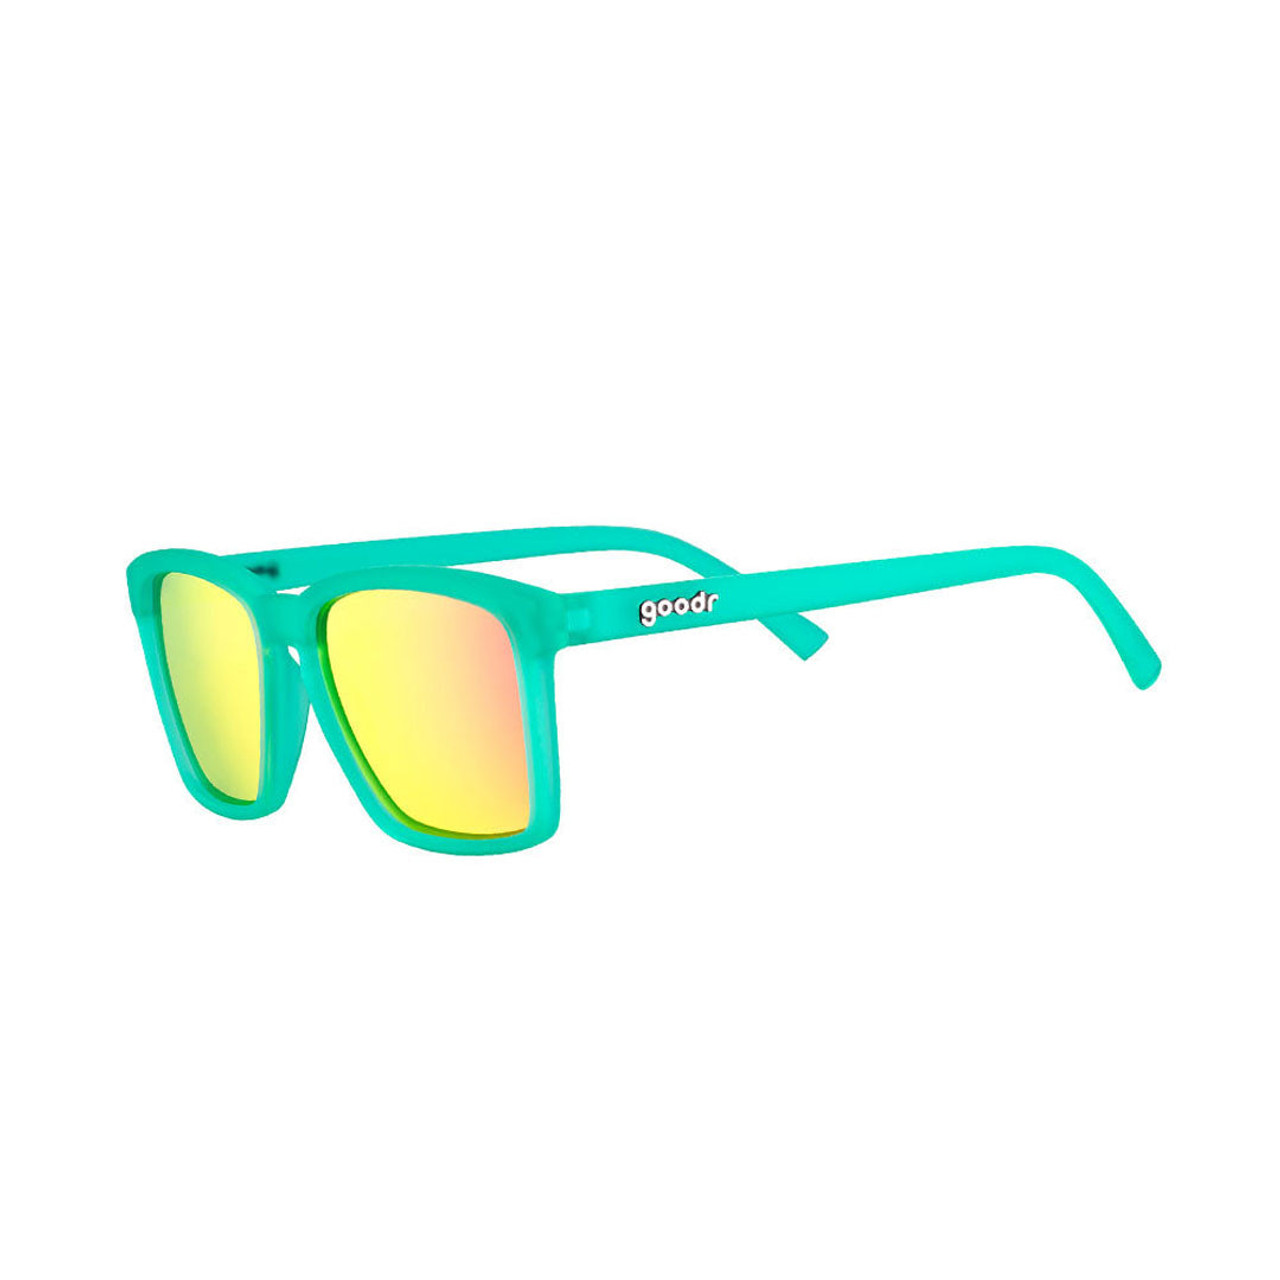 Dior Eyewear CatStyleDior1 cat-eye frame sunglasses, SLOCOG'S